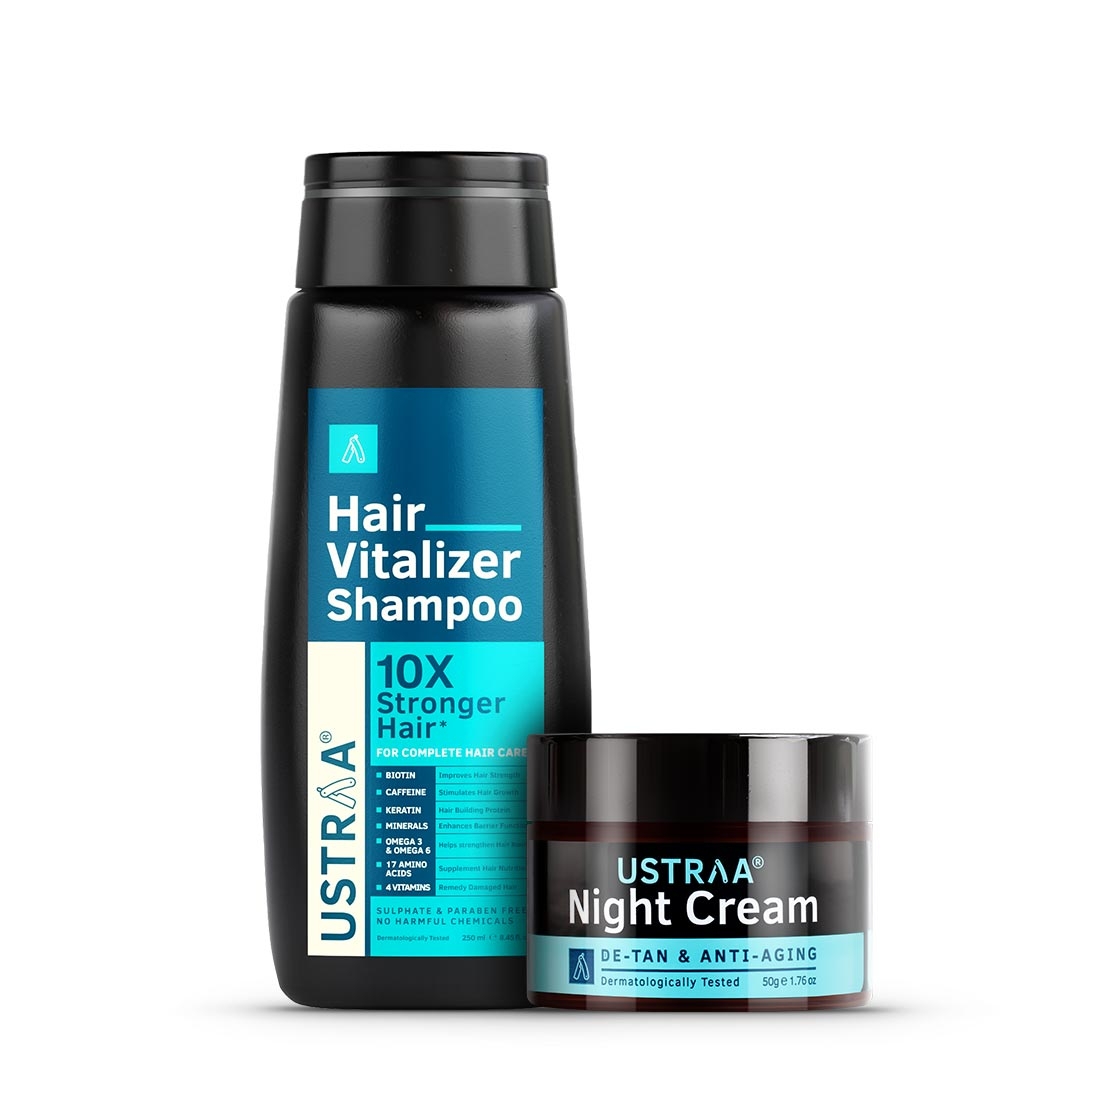 Ustraa | Ustraa Hair Vitalizer Shampoo - 250ml & Night Cream - De Tan And Anti Aging - 50g 0